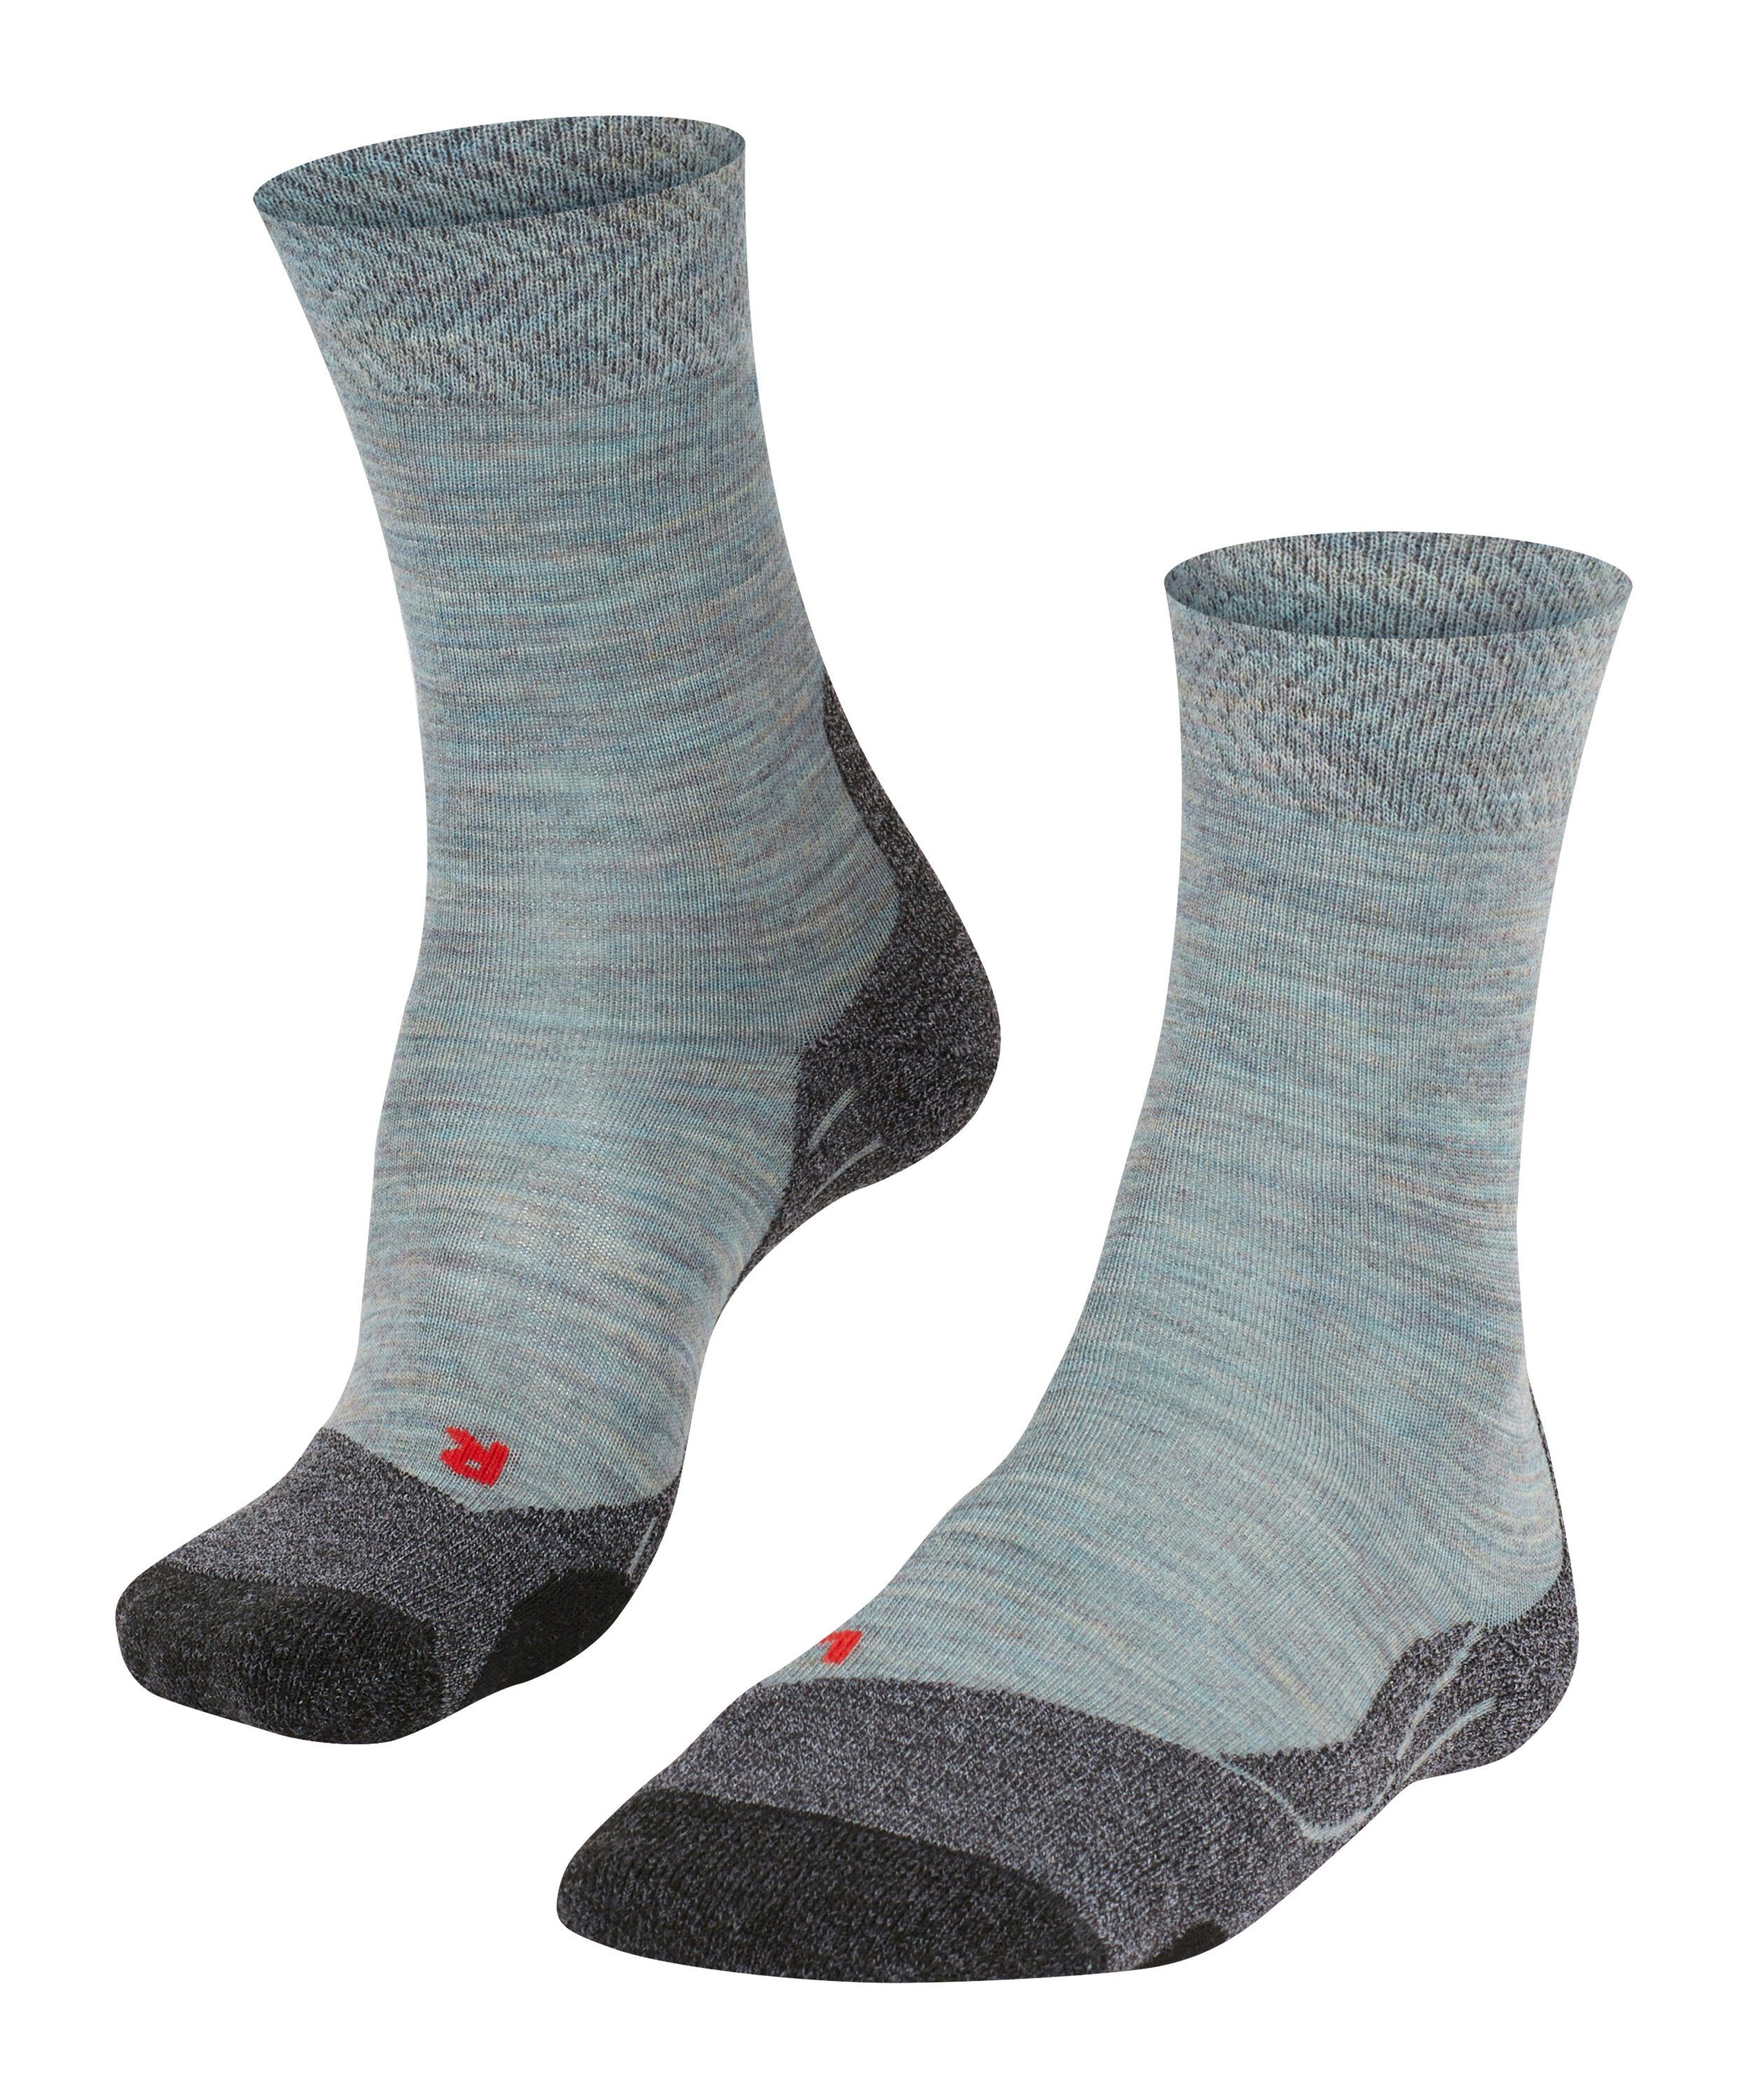 Falke Damen Socken online kaufen | OTTO